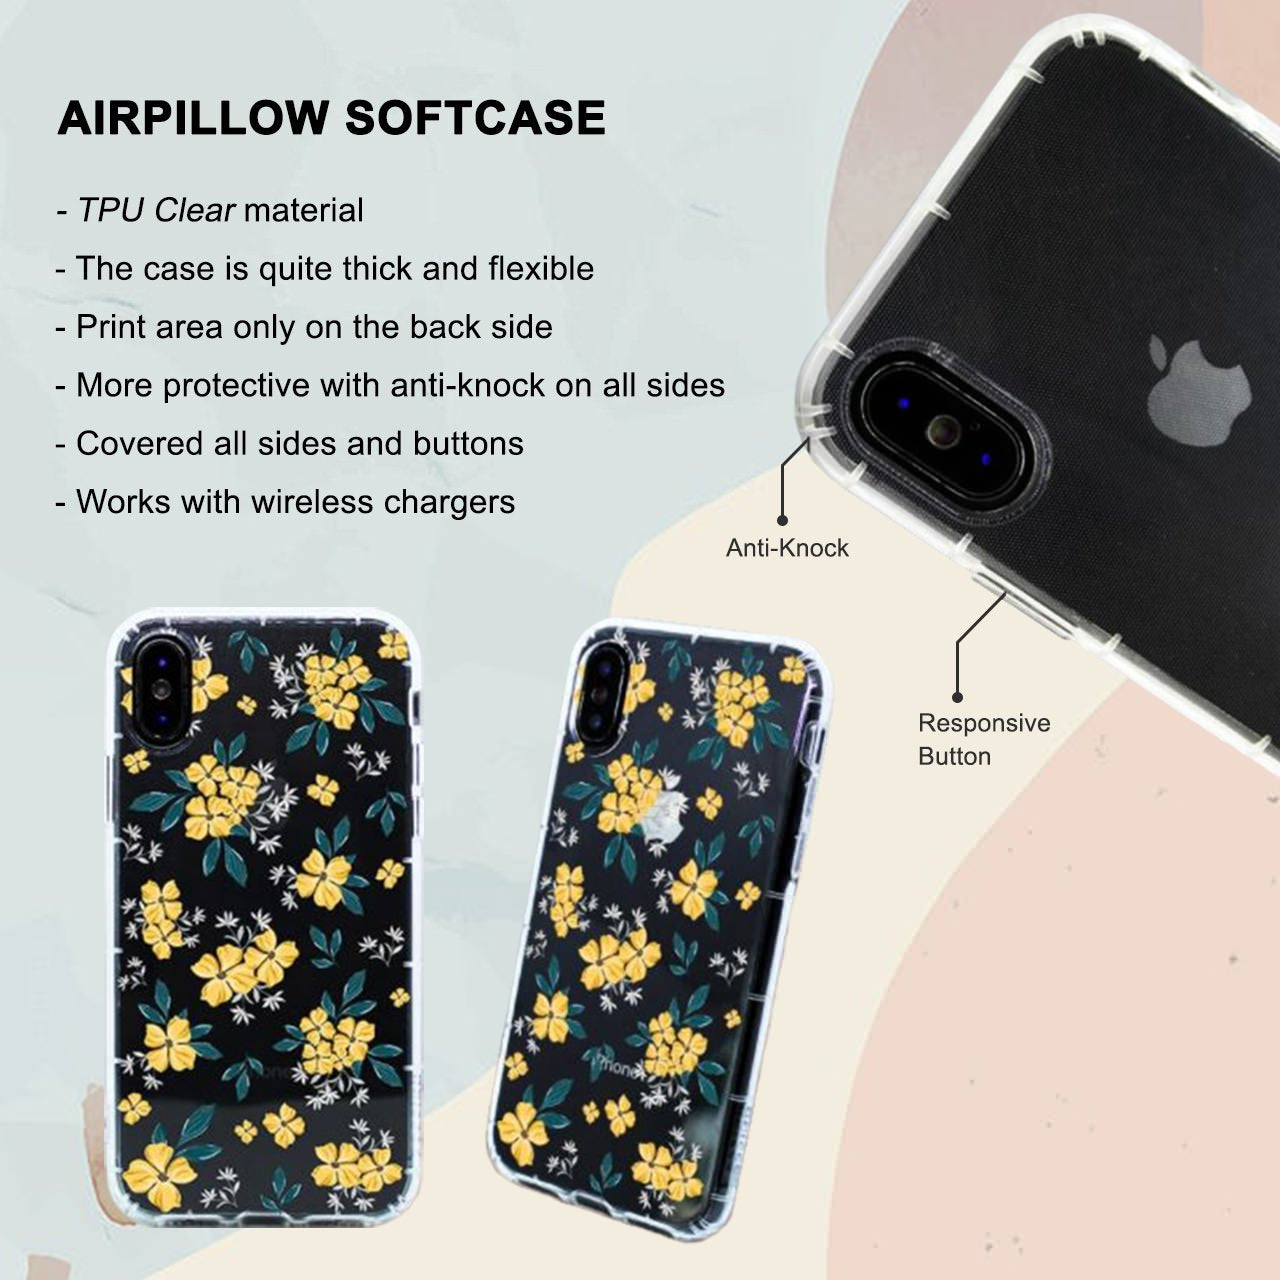 Astronaut Heavy Walk iPhone 6 / 6s Plus Case